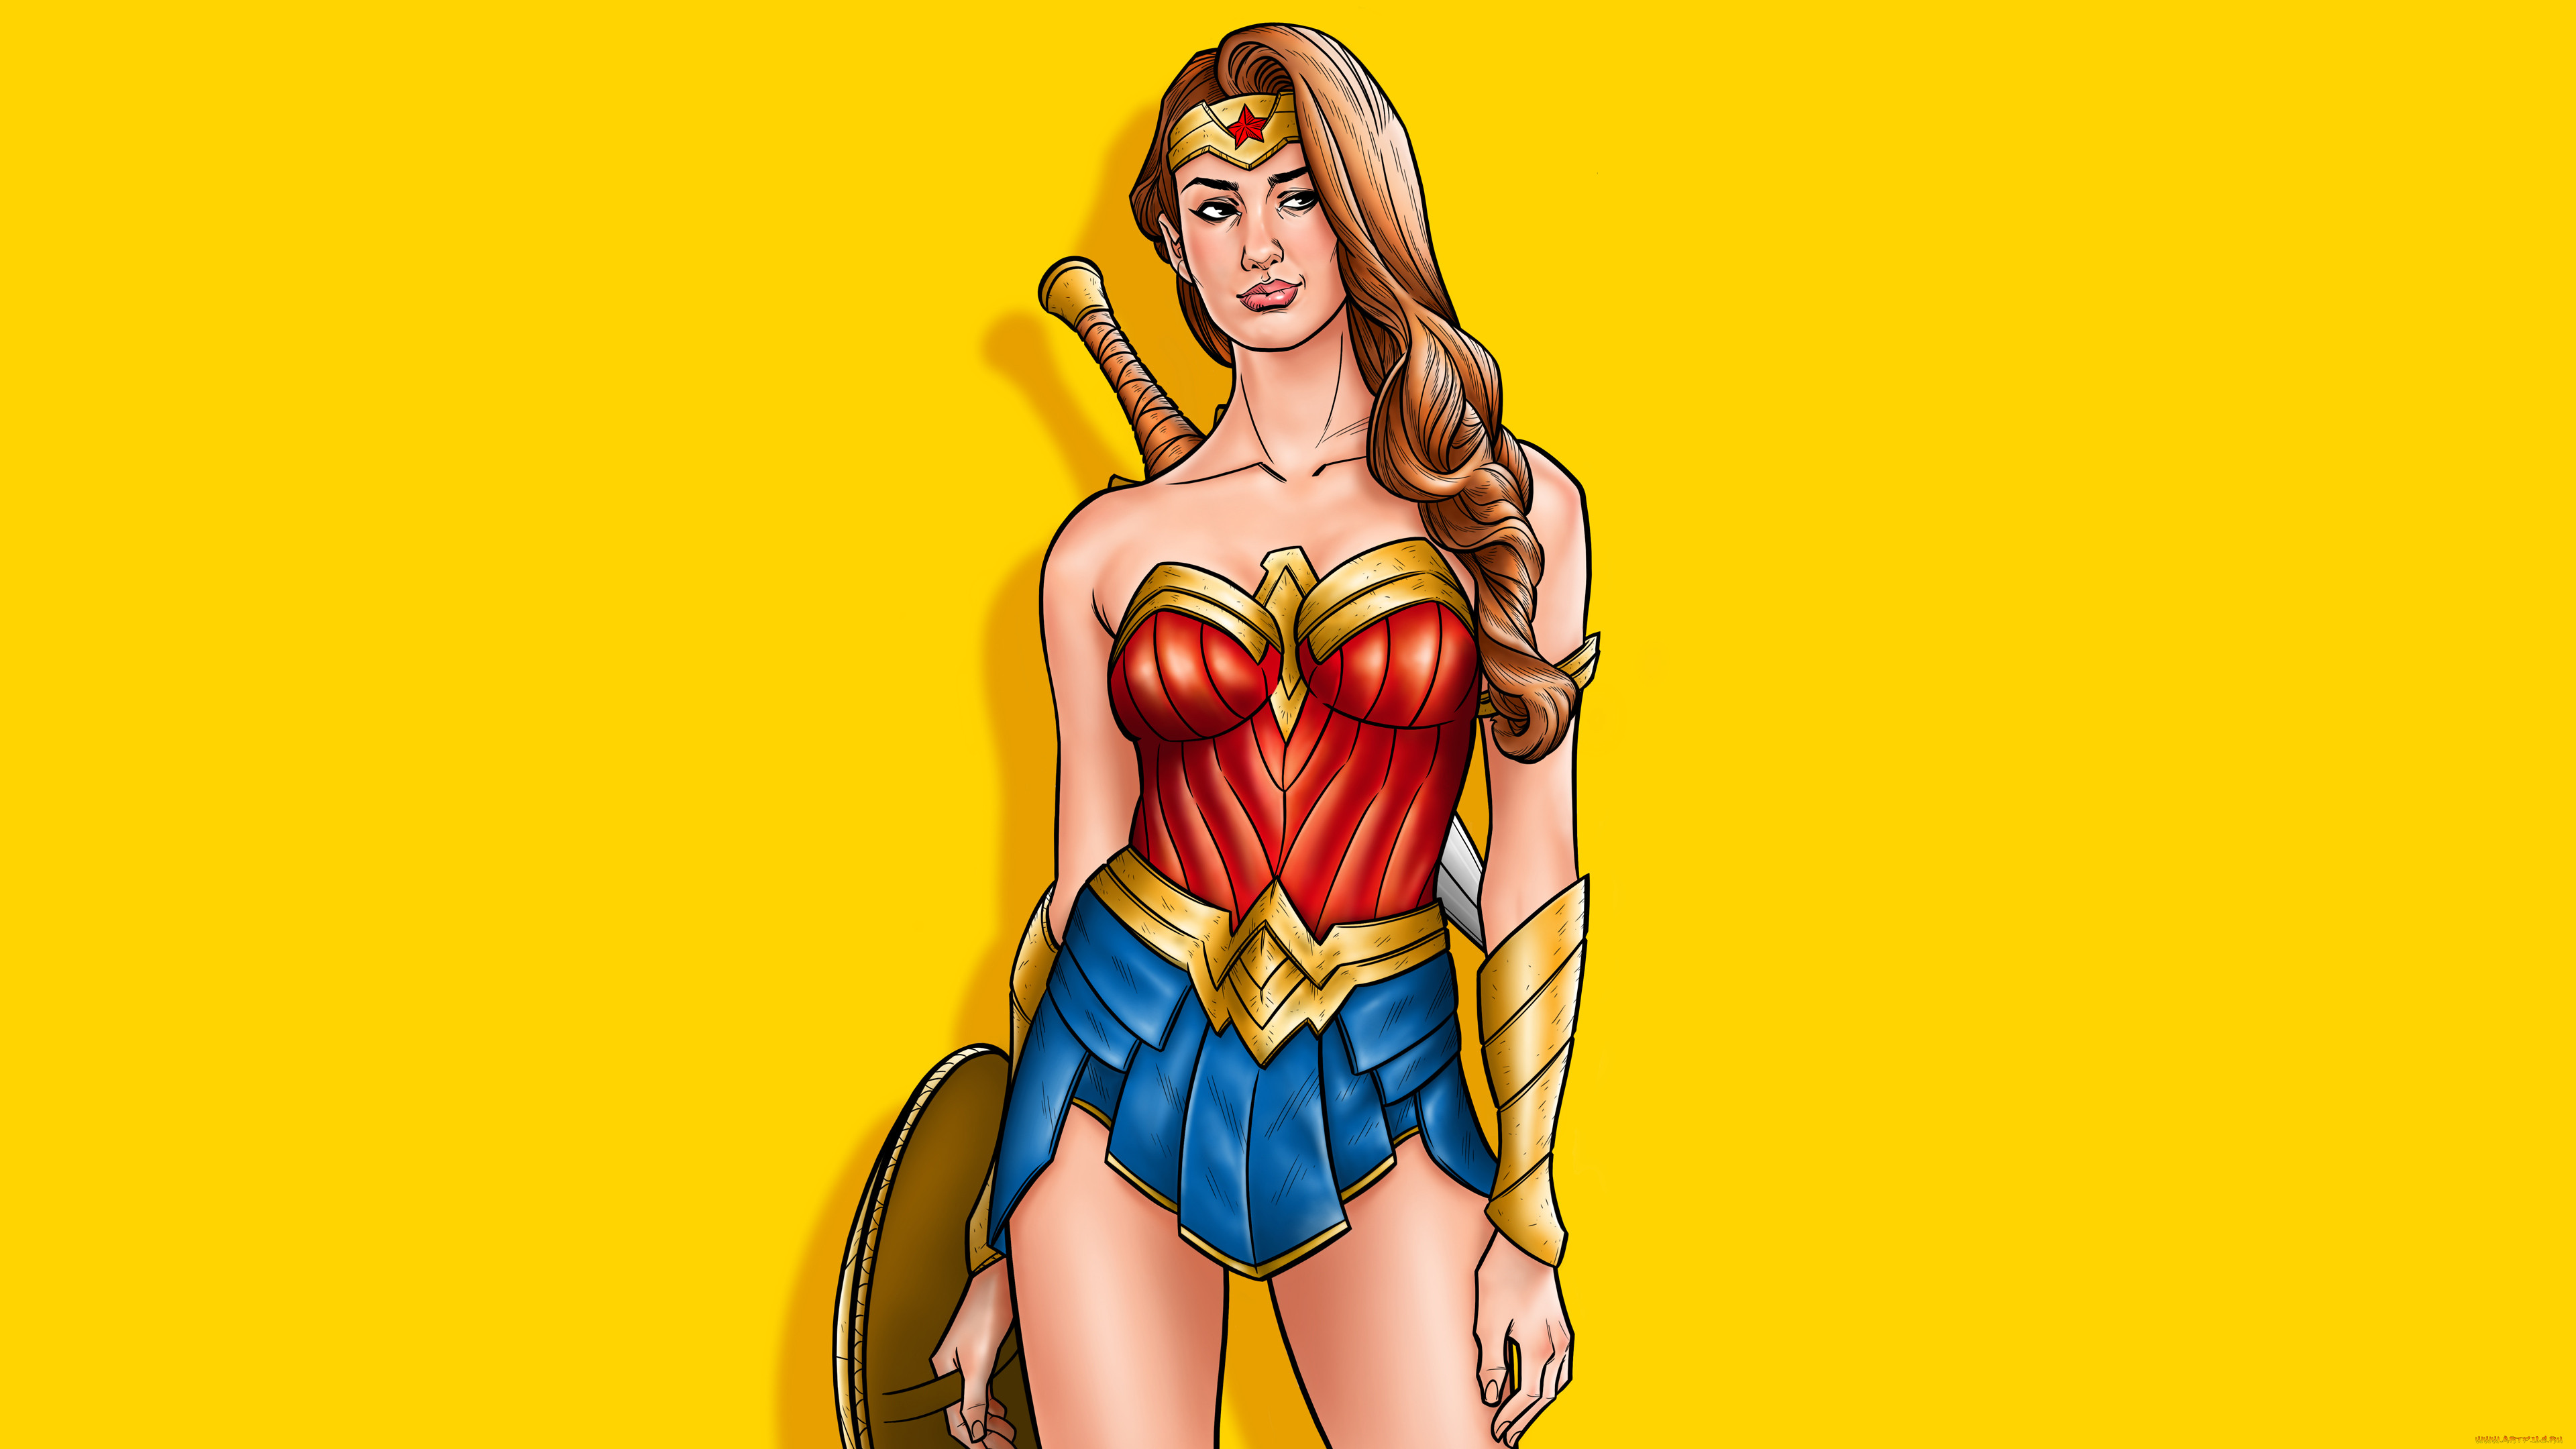 Wallpaper, Wonder Woman, yellow background, simple background, fantasy girl 3840x2160